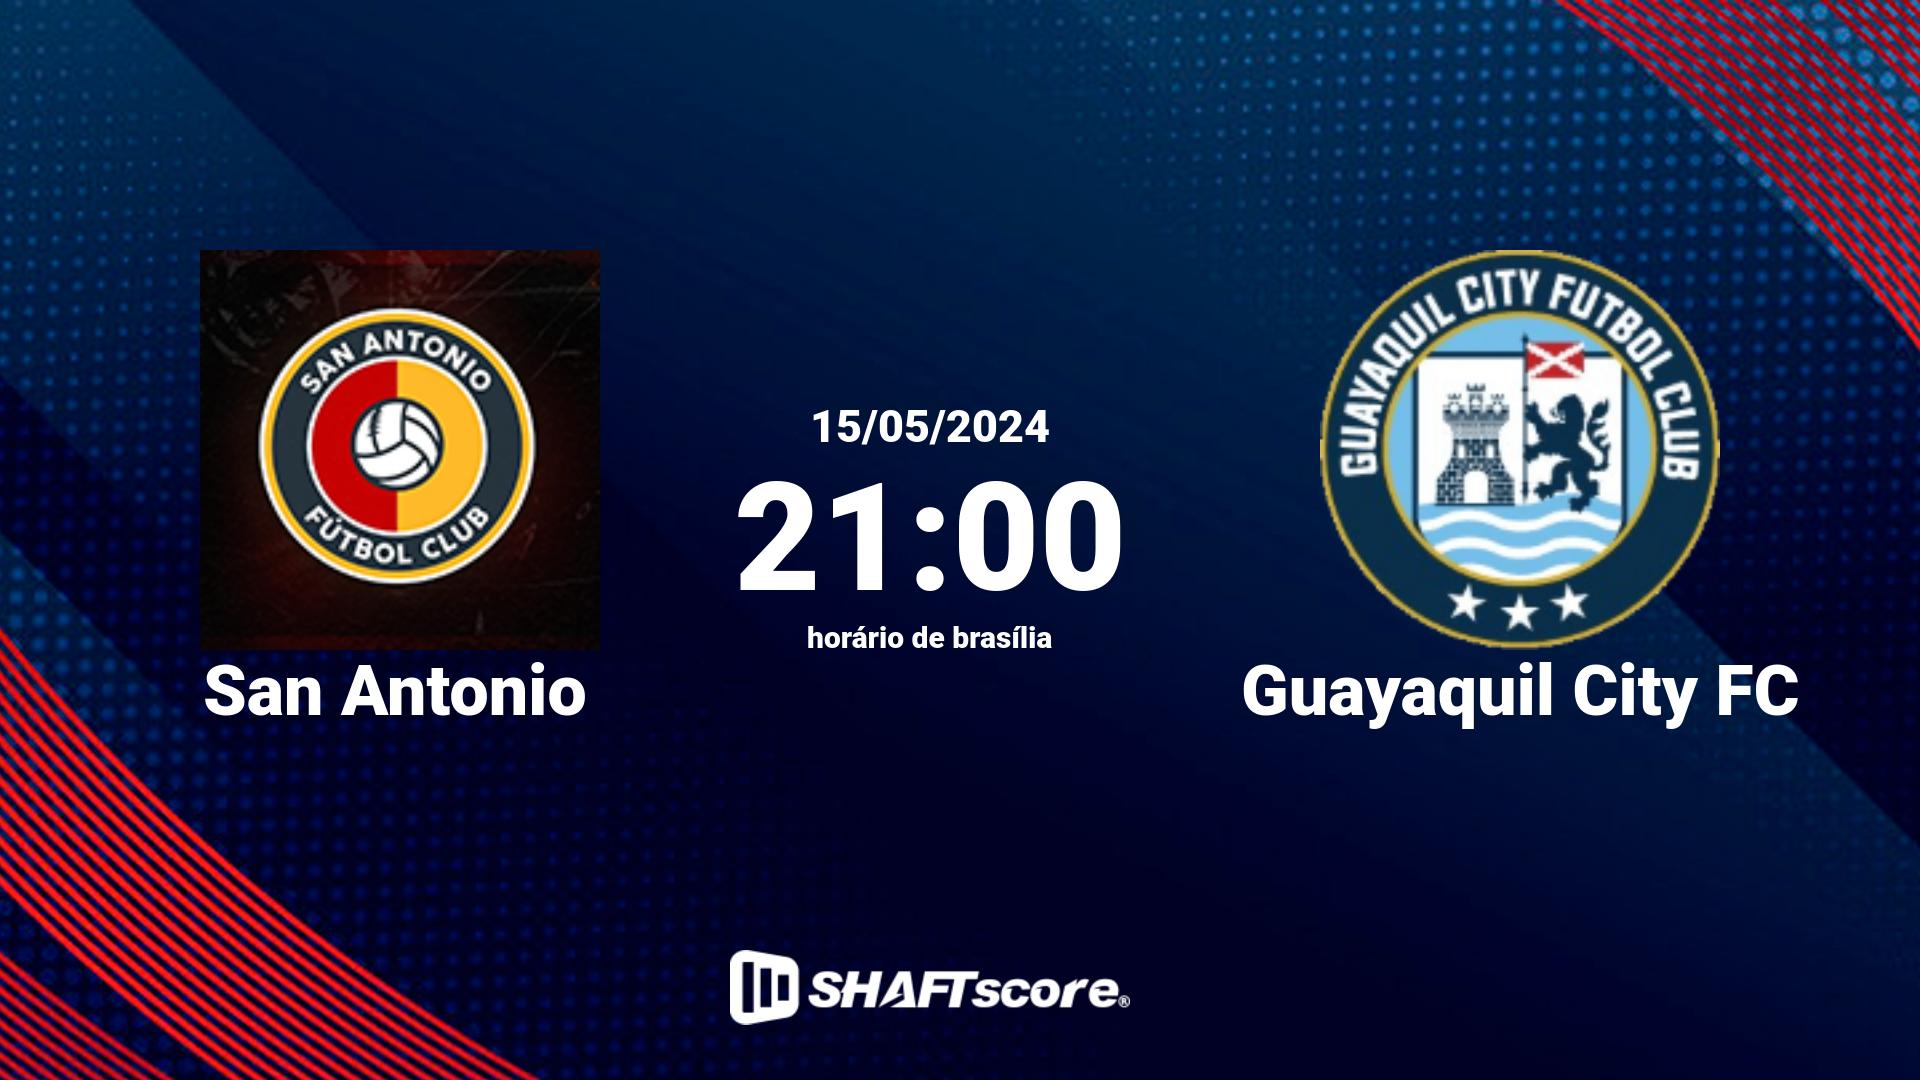 Estatísticas do jogo San Antonio vs Guayaquil City FC 15.05 21:00